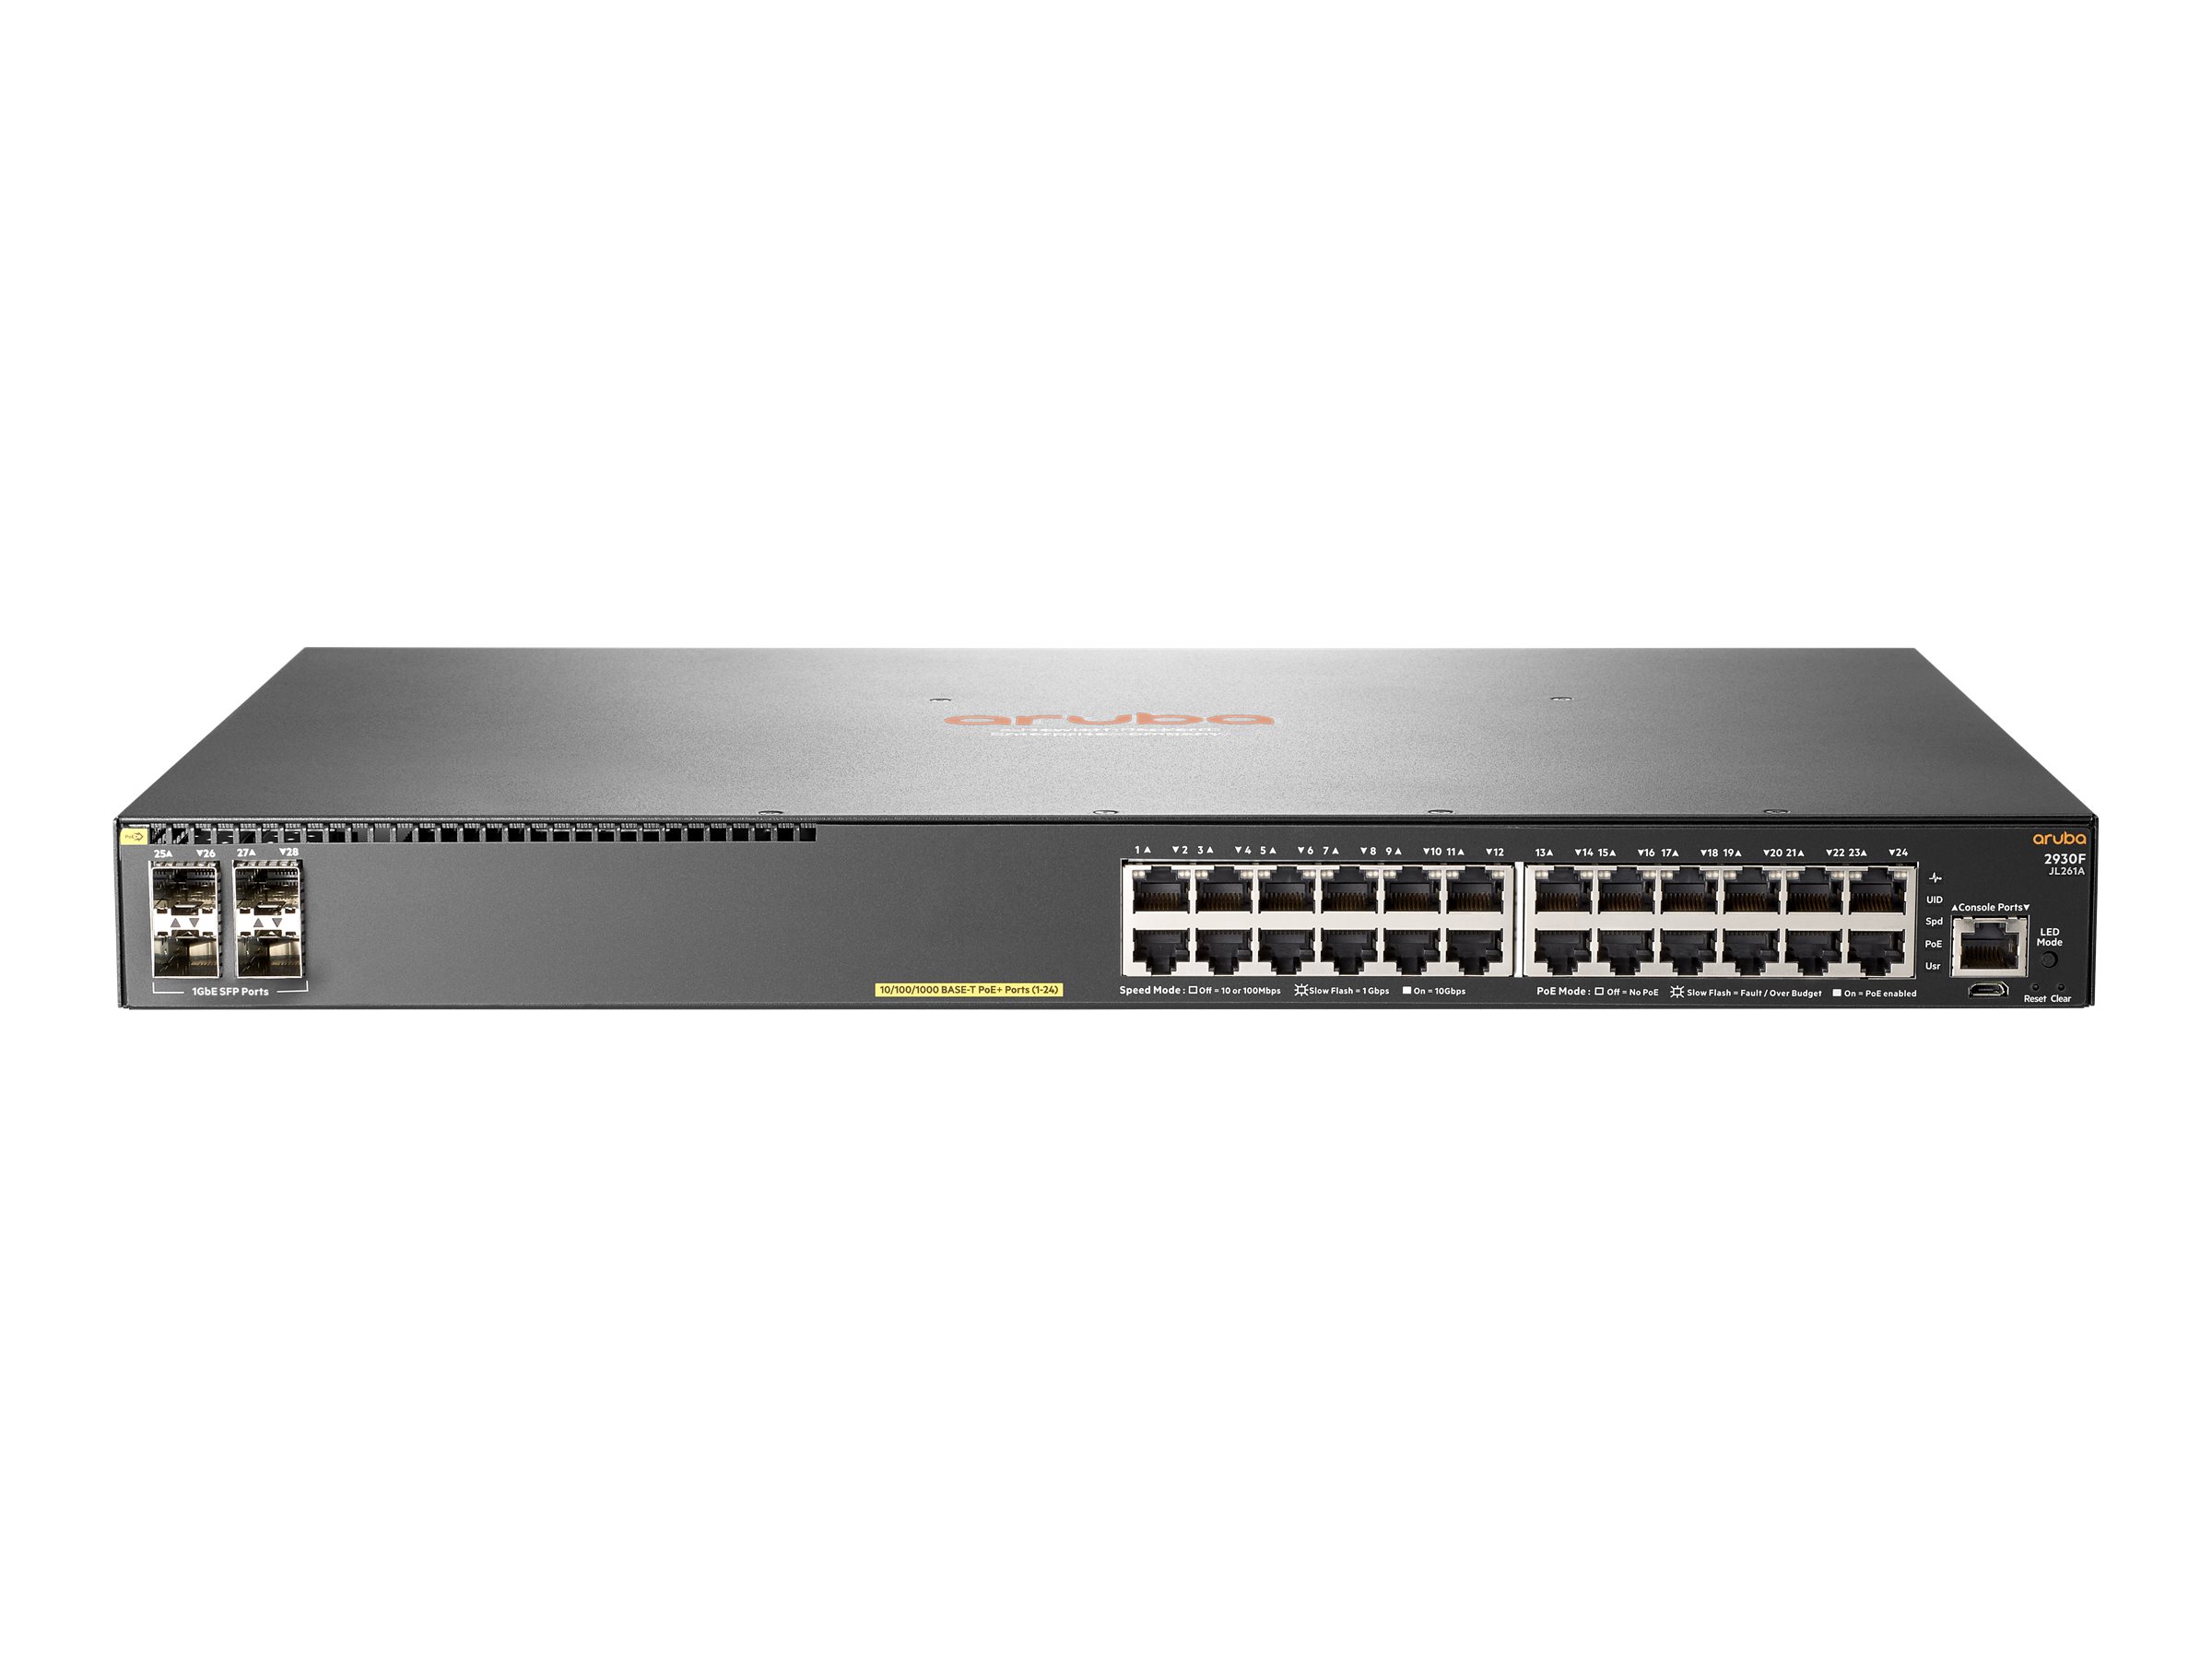 HPE Aruba 2930F 24G PoE+ 4SFP - switch - 24 ports - managed - rack-moun (JL261A)